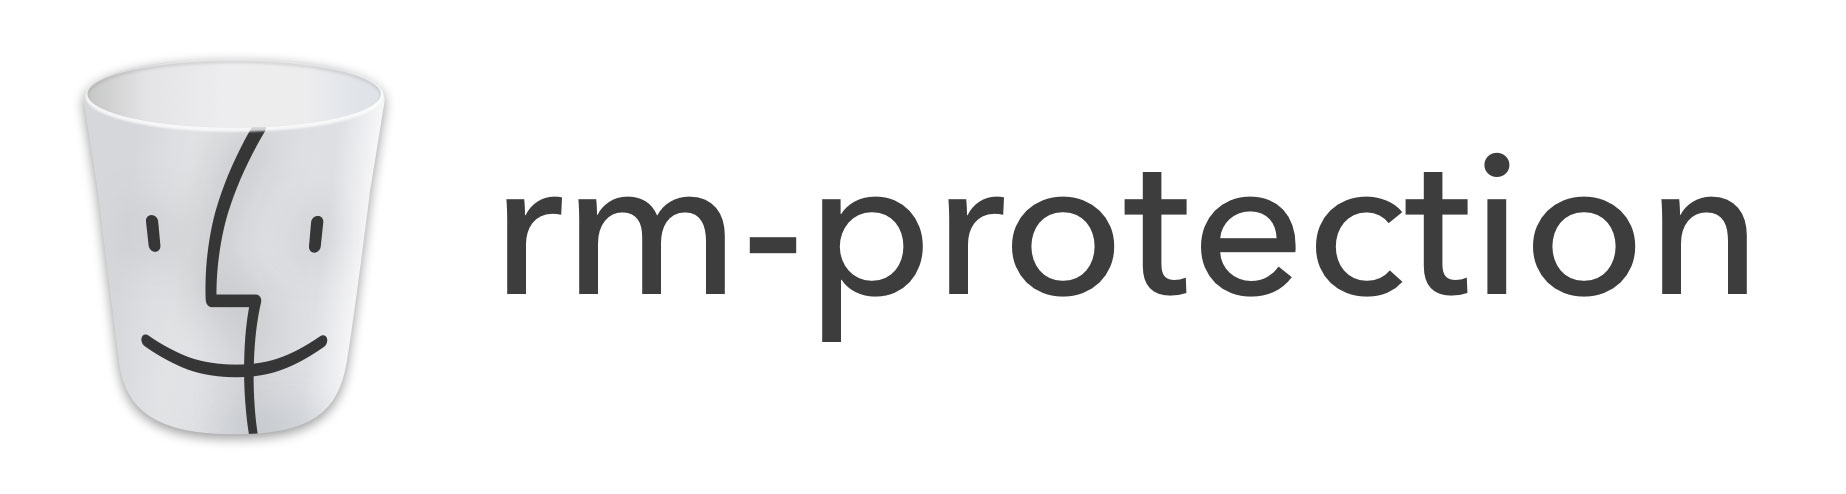 rm-protection - 防止误删除、预防 GitLab 事件再次发生 1